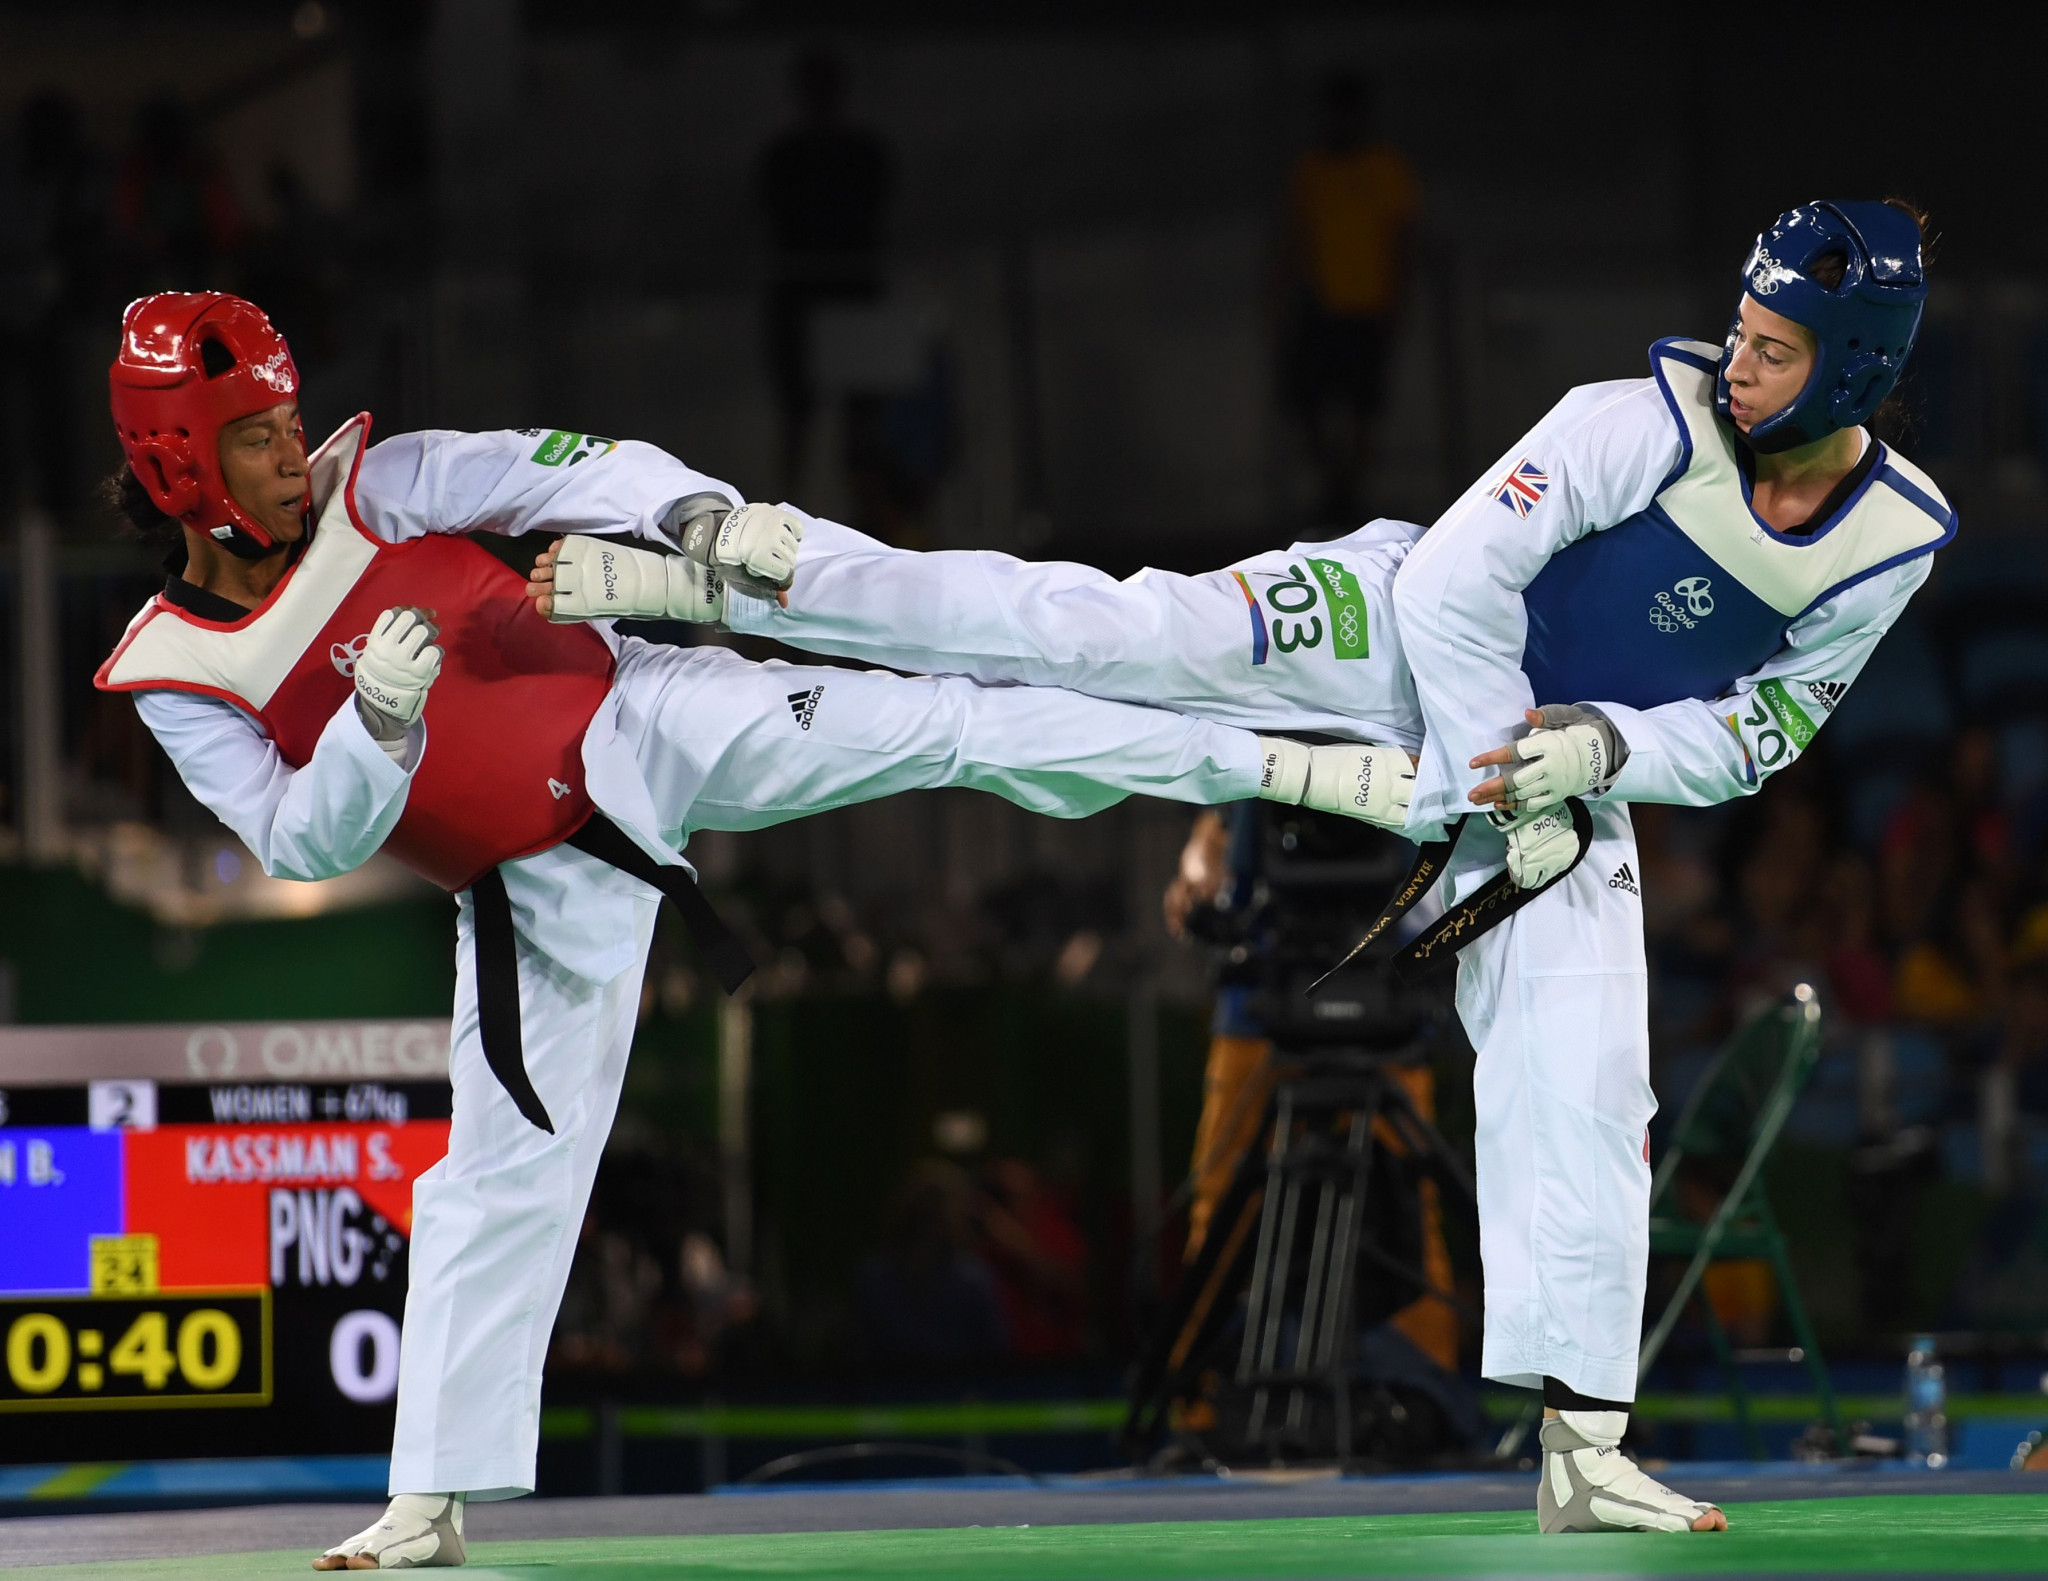 Taekwondo Papua New Guinea President John Cholai has set his targets on a podium place at Tokyo 2020 ©Getty Images